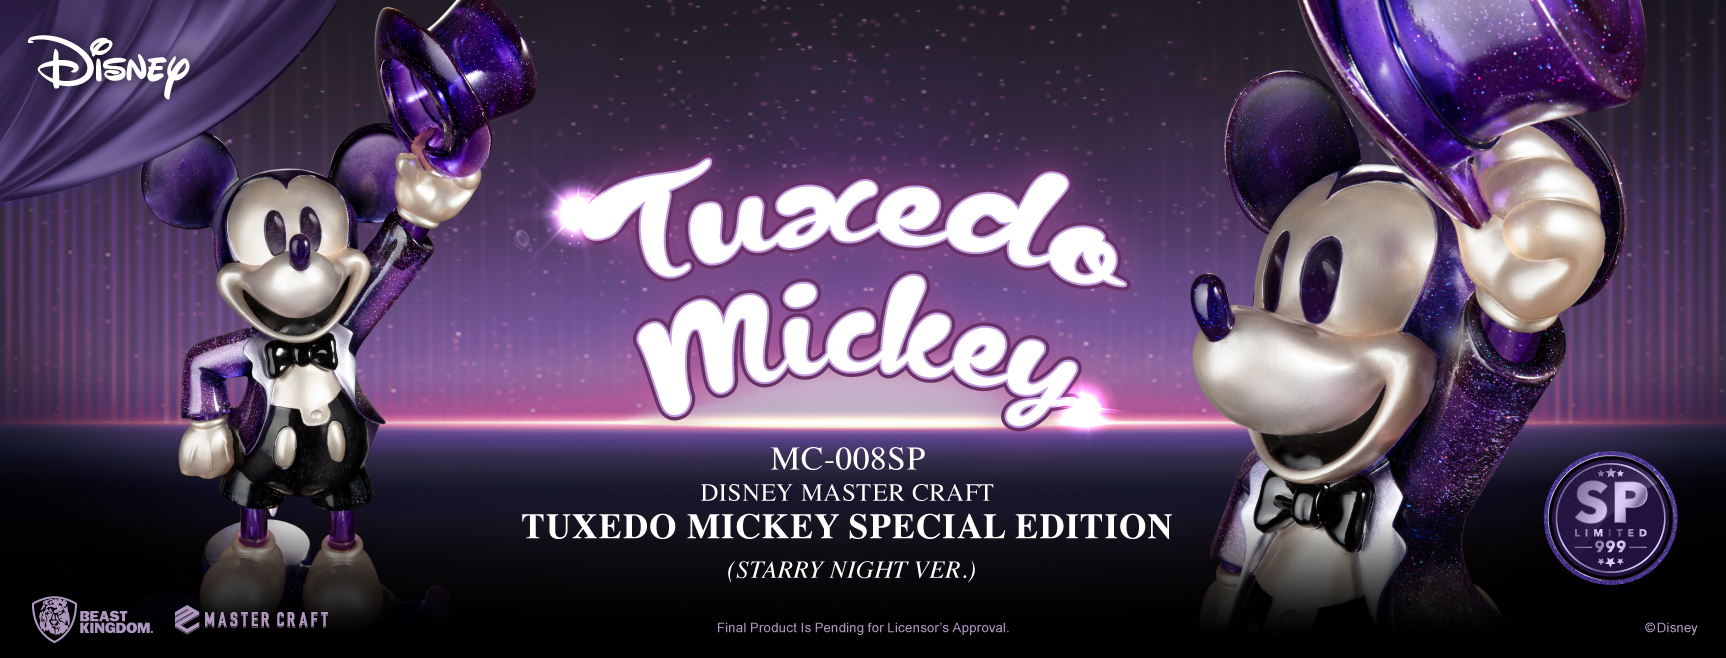 MC-008SP Disney Master Craft Tuxedo Mickey Special Edition (Starry Night Ver.)